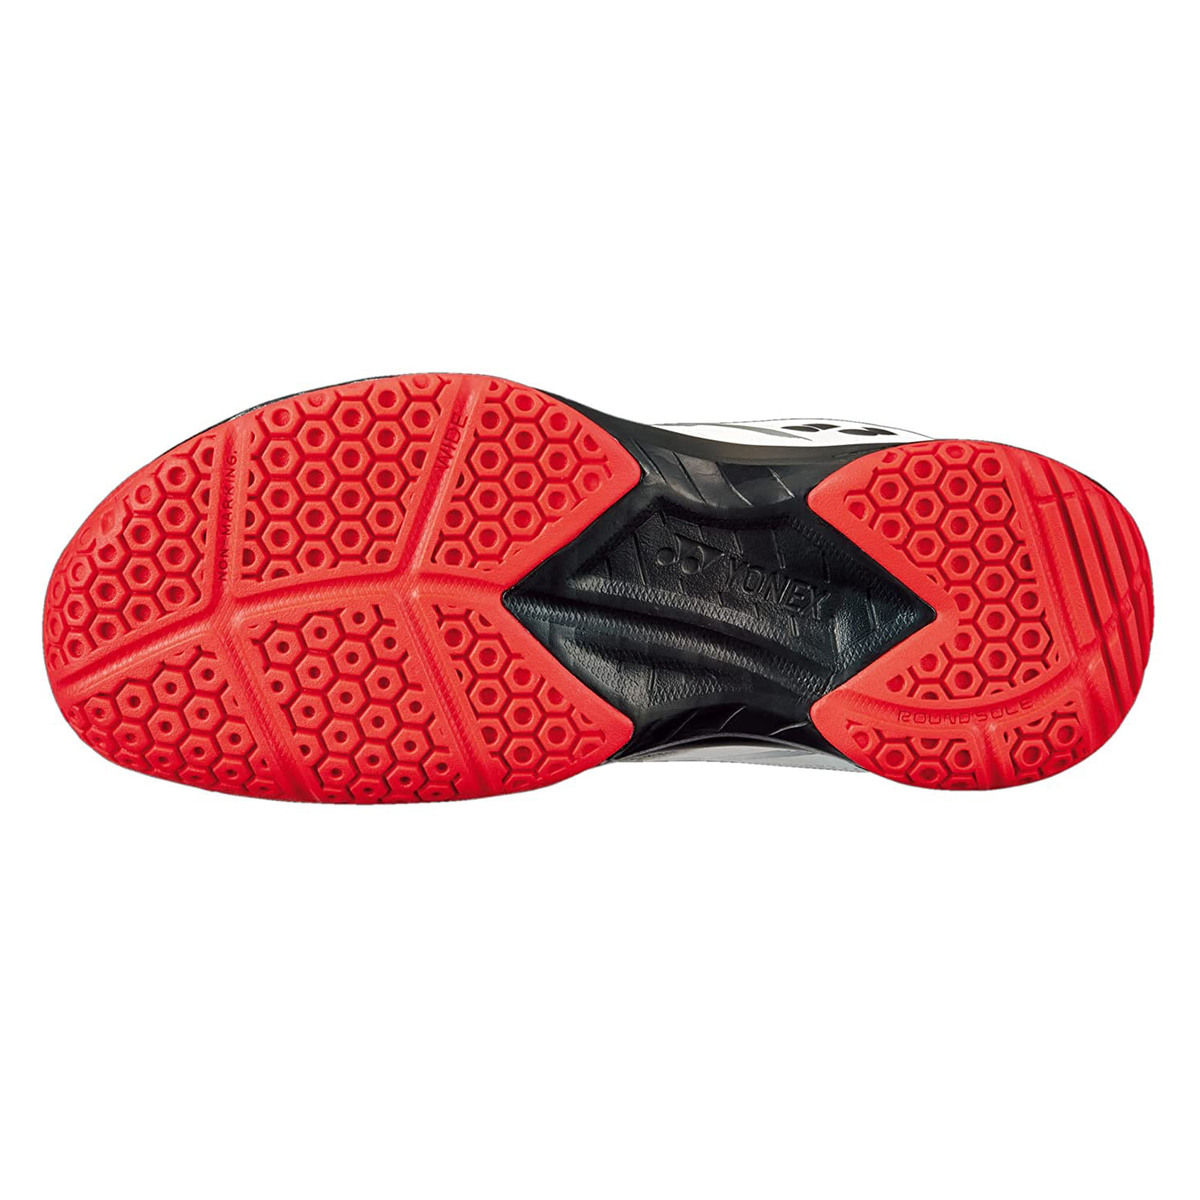 Yonex Mens Badminton Shoes, SHB39WEX, White/Red, 41